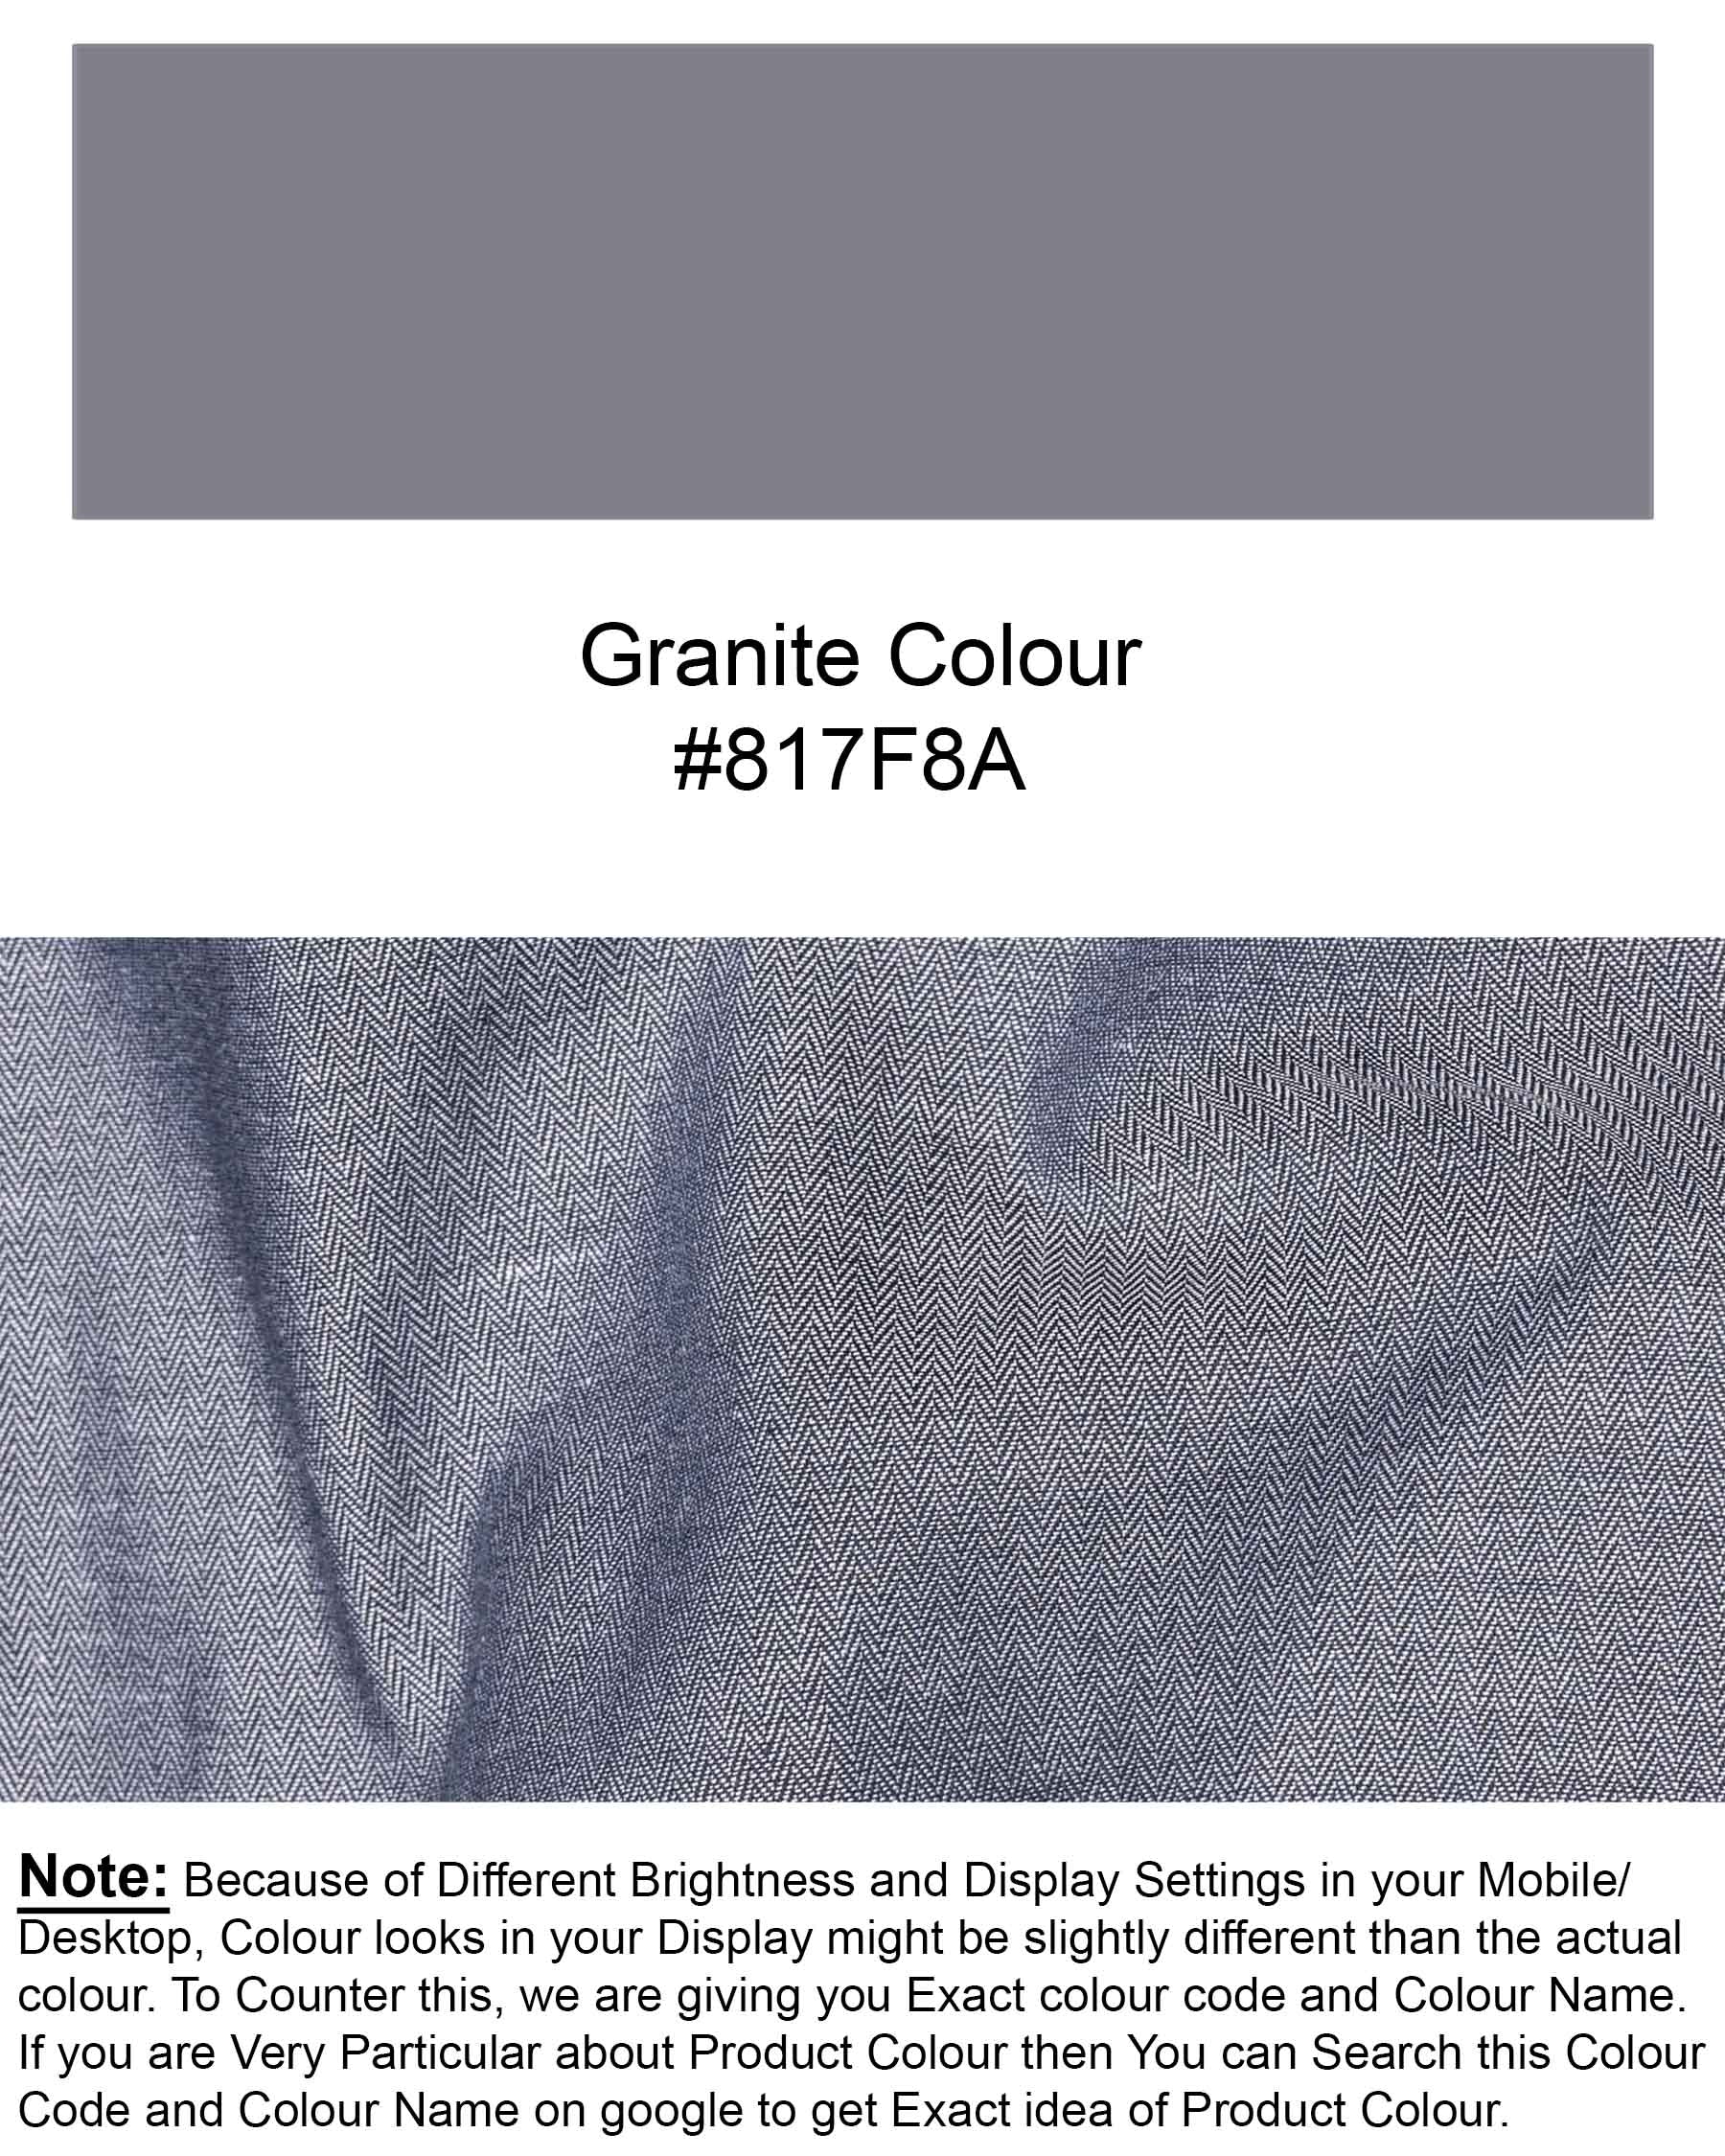 Granite Grey Solid Herringbone Shirt 6405-CA-38, 6405-CA-H-38, 6405-CA-39, 6405-CA-H-39, 6405-CA-40, 6405-CA-H-40, 6405-CA-42, 6405-CA-H-42, 6405-CA-44, 6405-CA-H-44, 6405-CA-46, 6405-CA-H-46, 6405-CA-48, 6405-CA-H-48, 6405-CA-50, 6405-CA-H-50, 6405-CA-52, 6405-CA-H-52